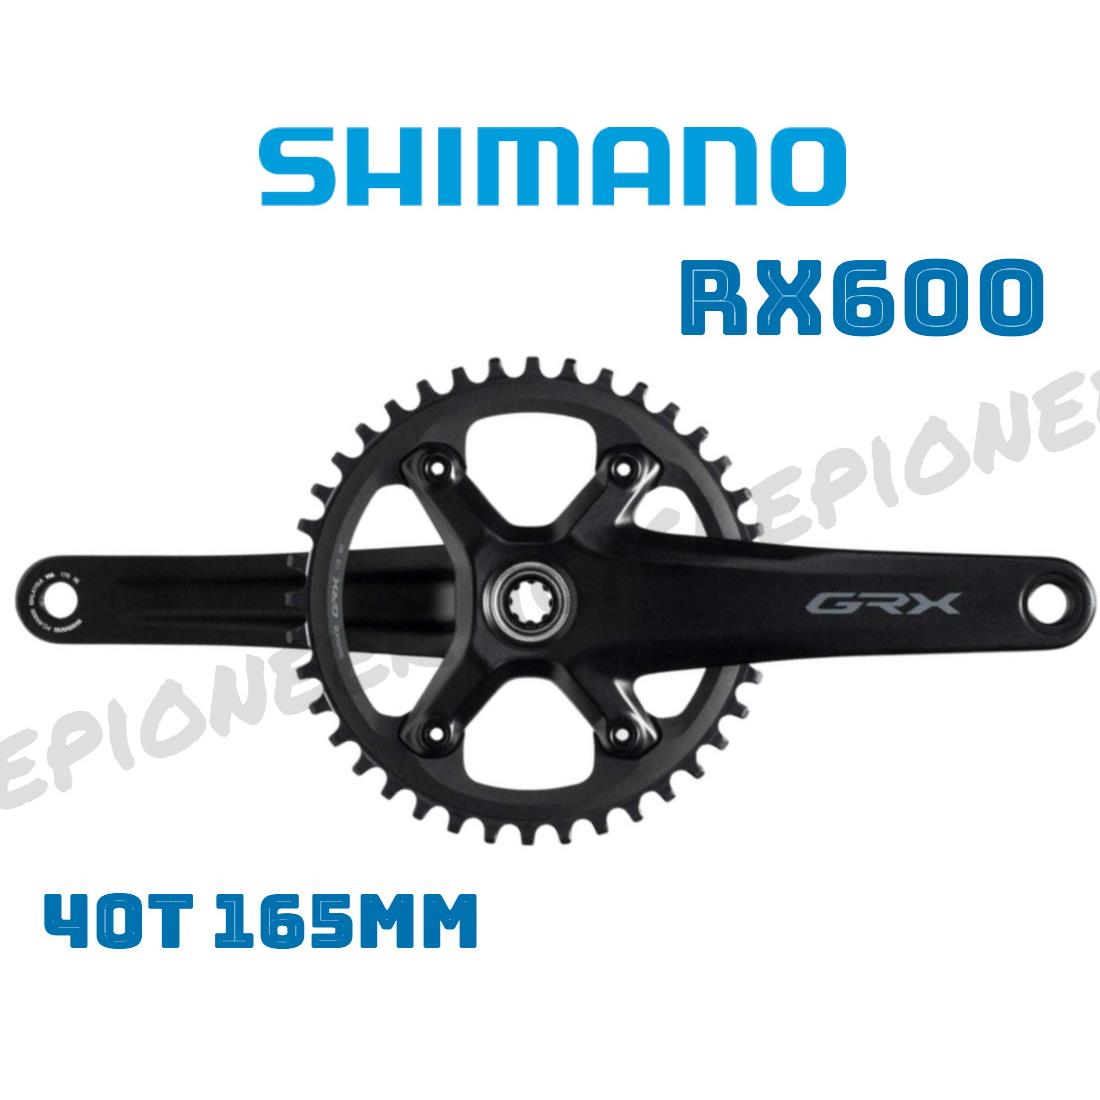 165mm 40T Shimano Grx 11Speed FC -RX600 Chainwheel